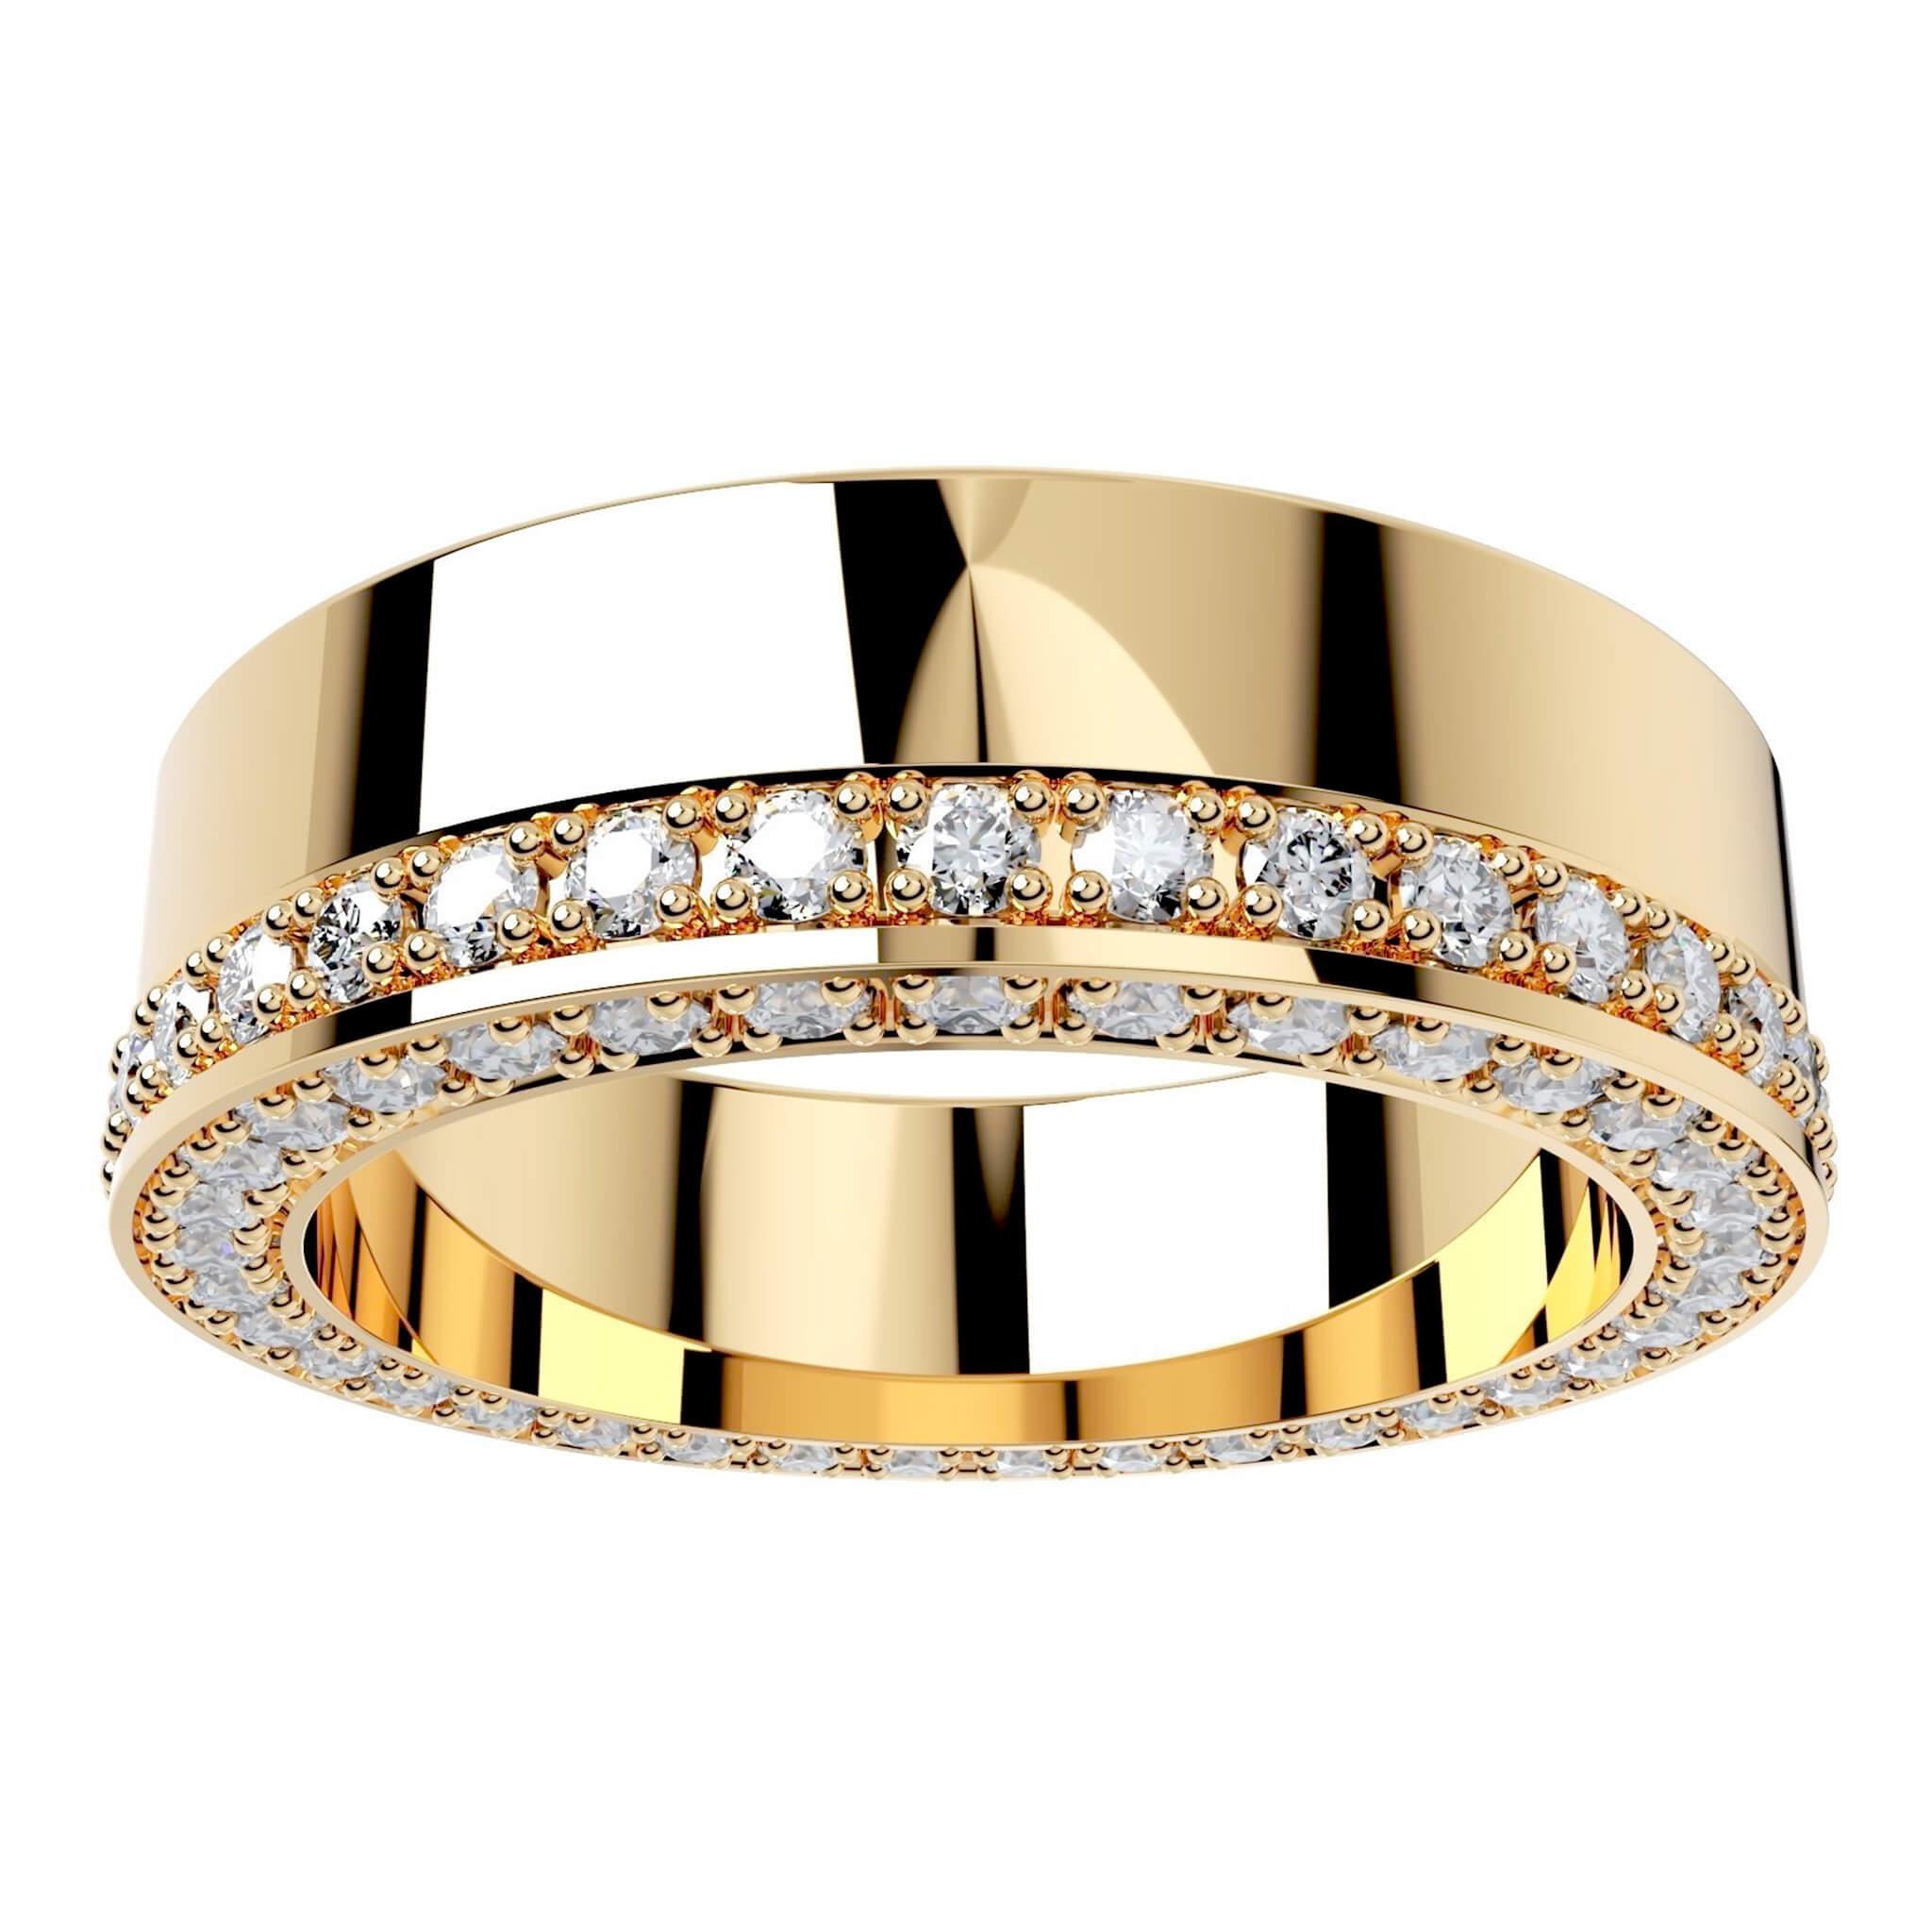 Mateo Rich Gold - Mens Diamond Ring with a Diamond Edge - Monroe Yorke Diamonds